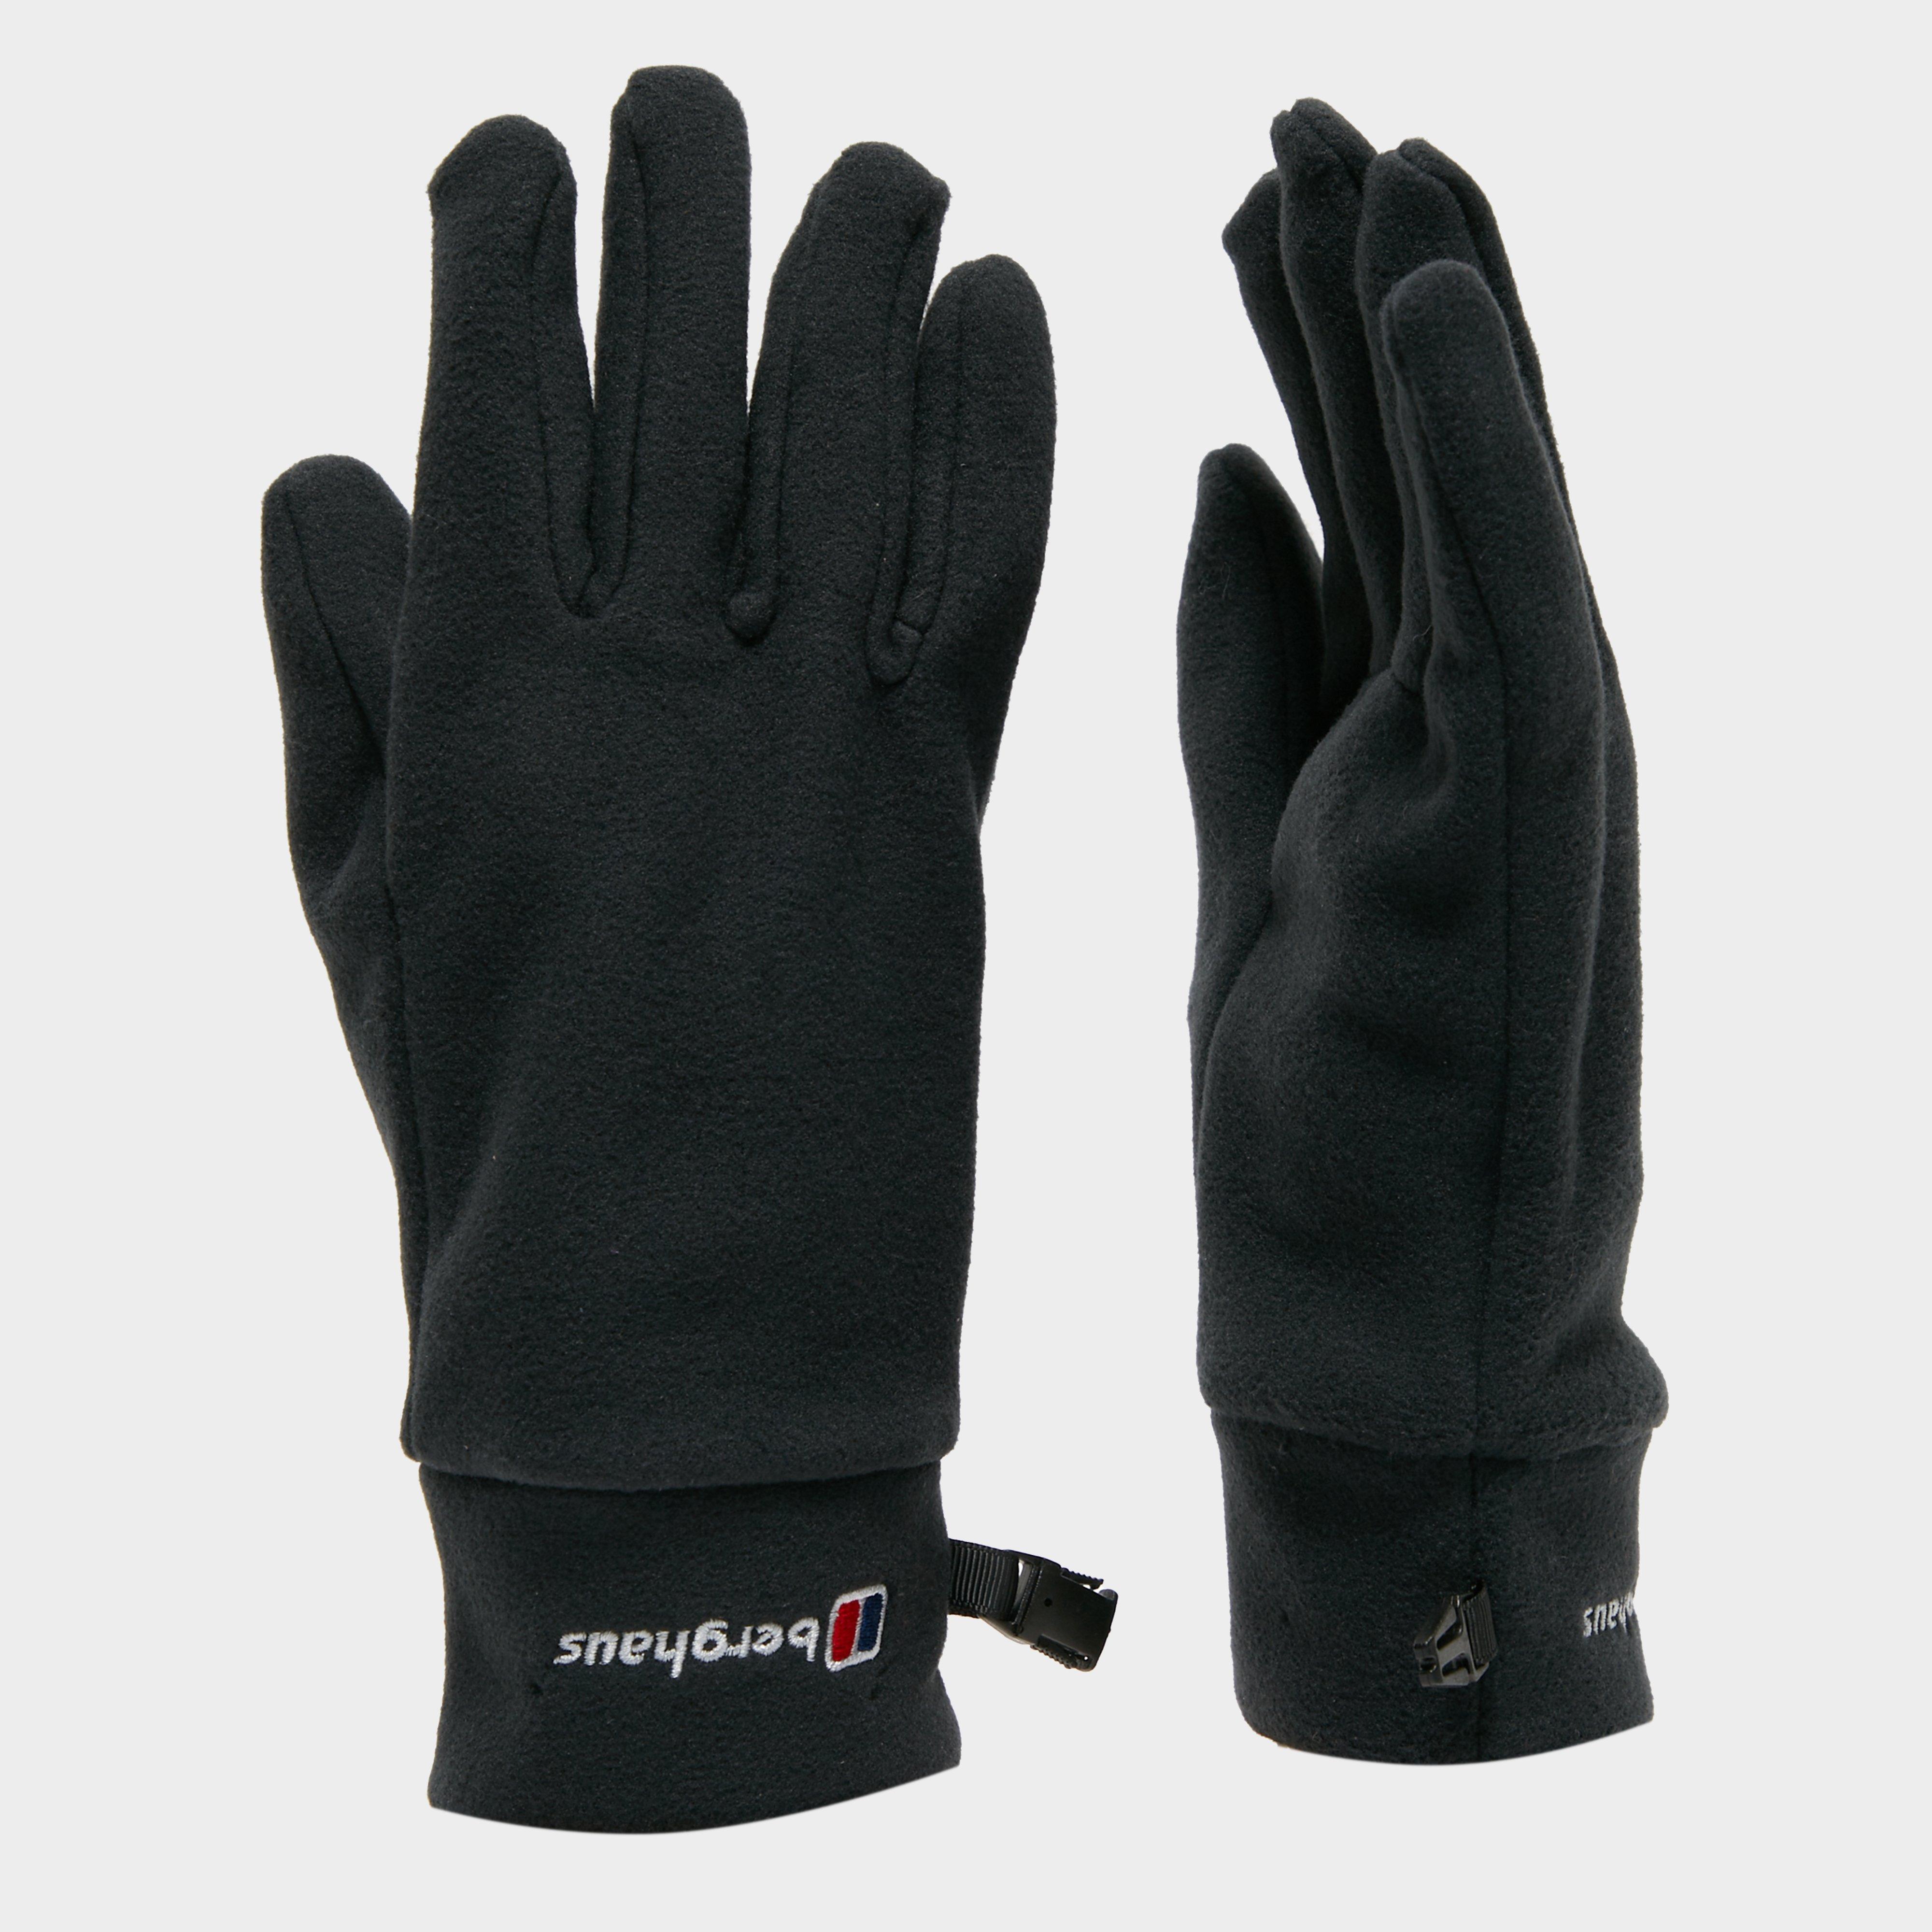 Berghaus señores guantes Fleece Spectrum gloves s/M cálida negro